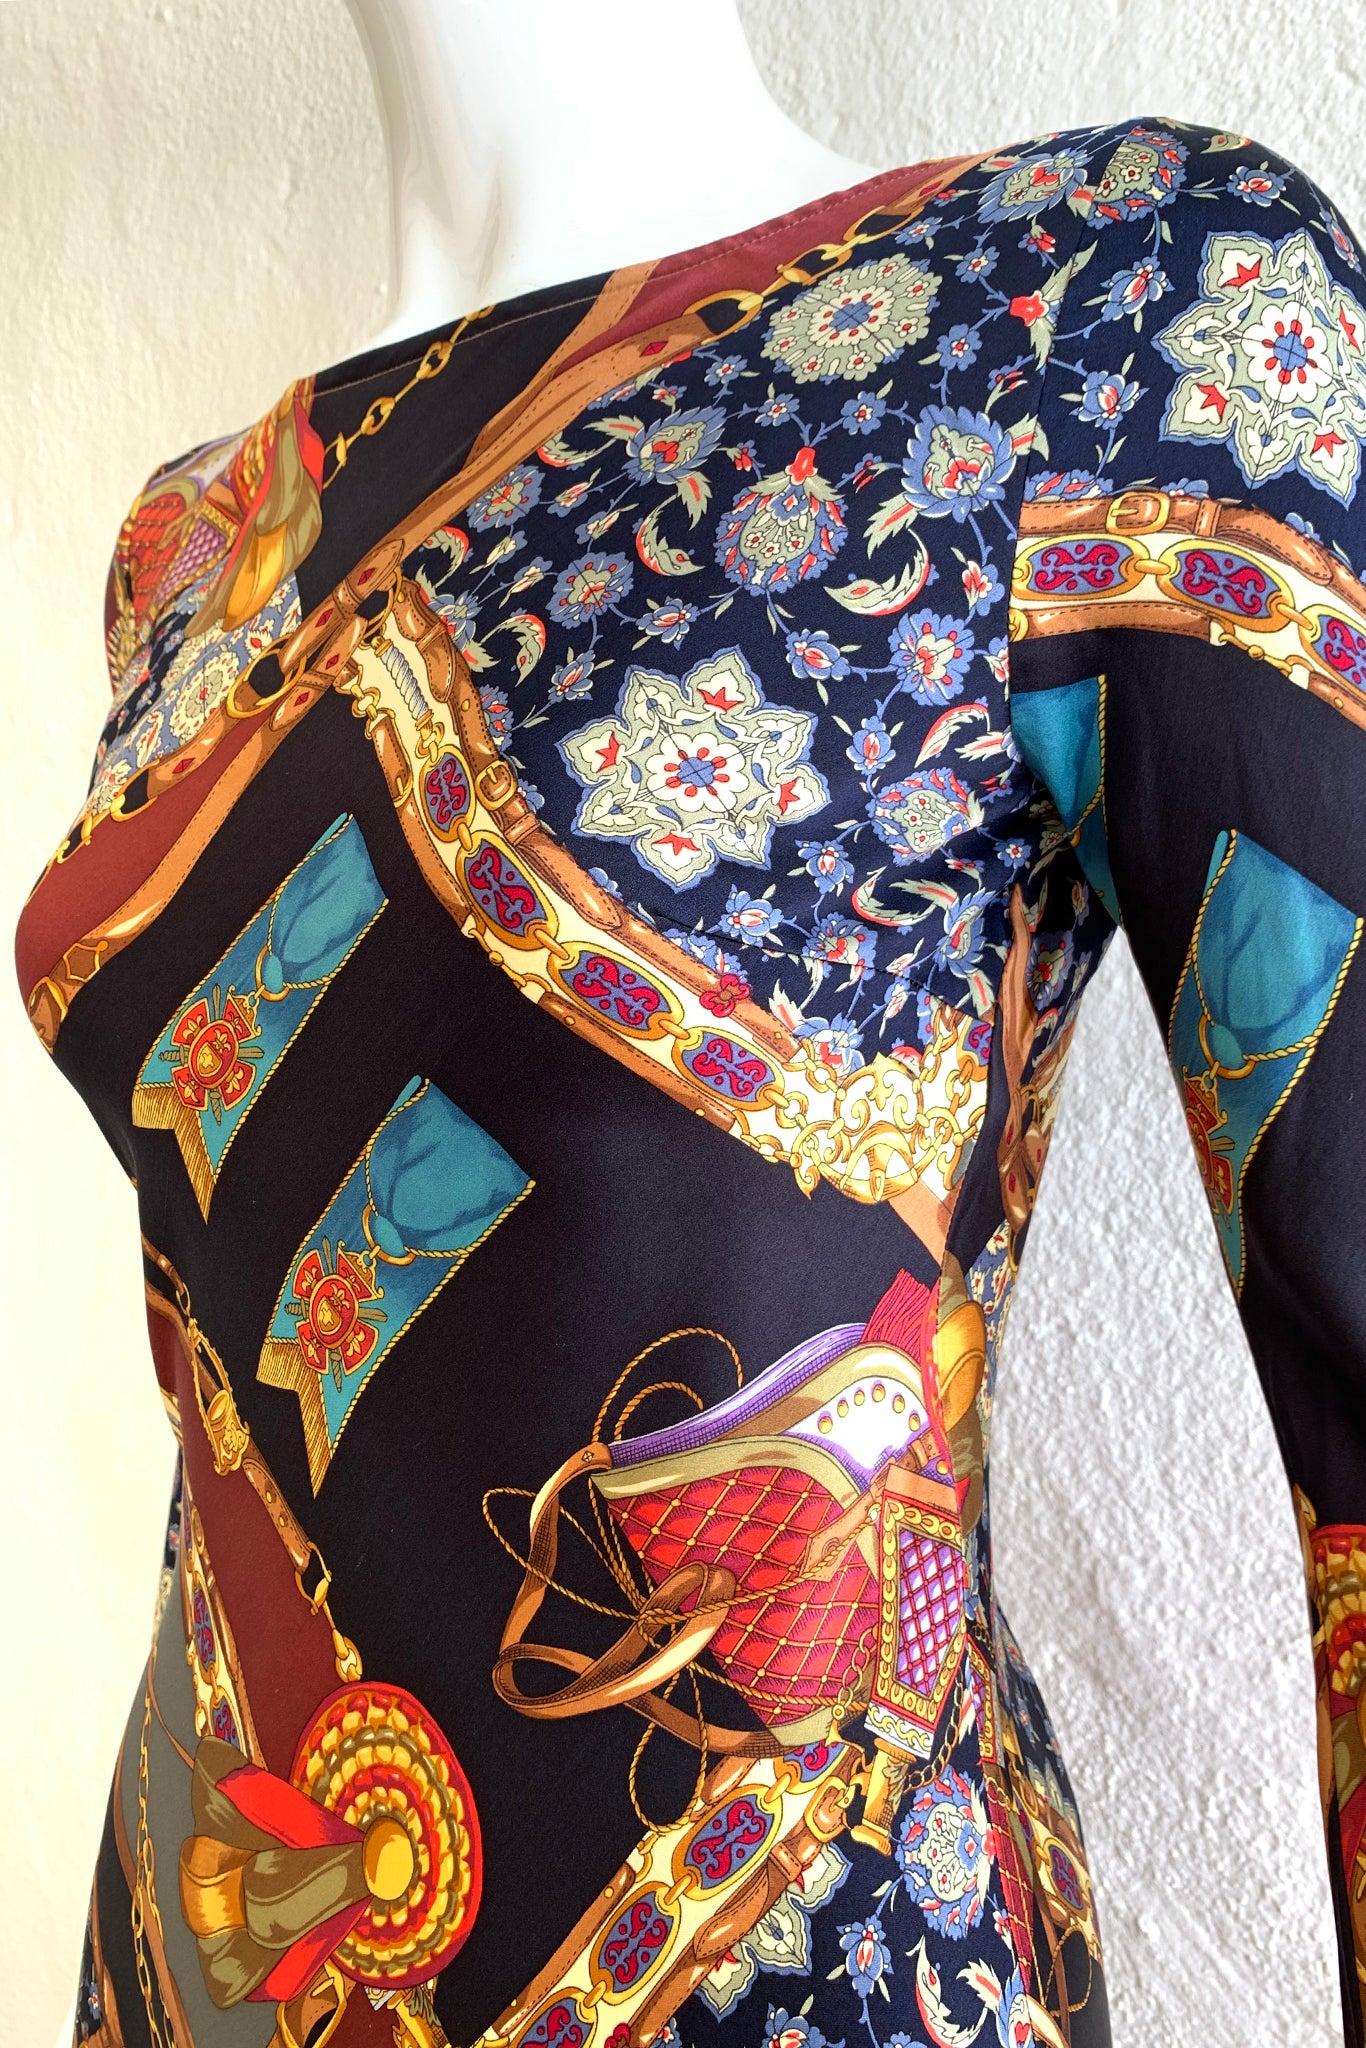 Vintage Diane Freis Buckle Horsebit Print Silk Bias Dress on Mannequin bust at Recess LA